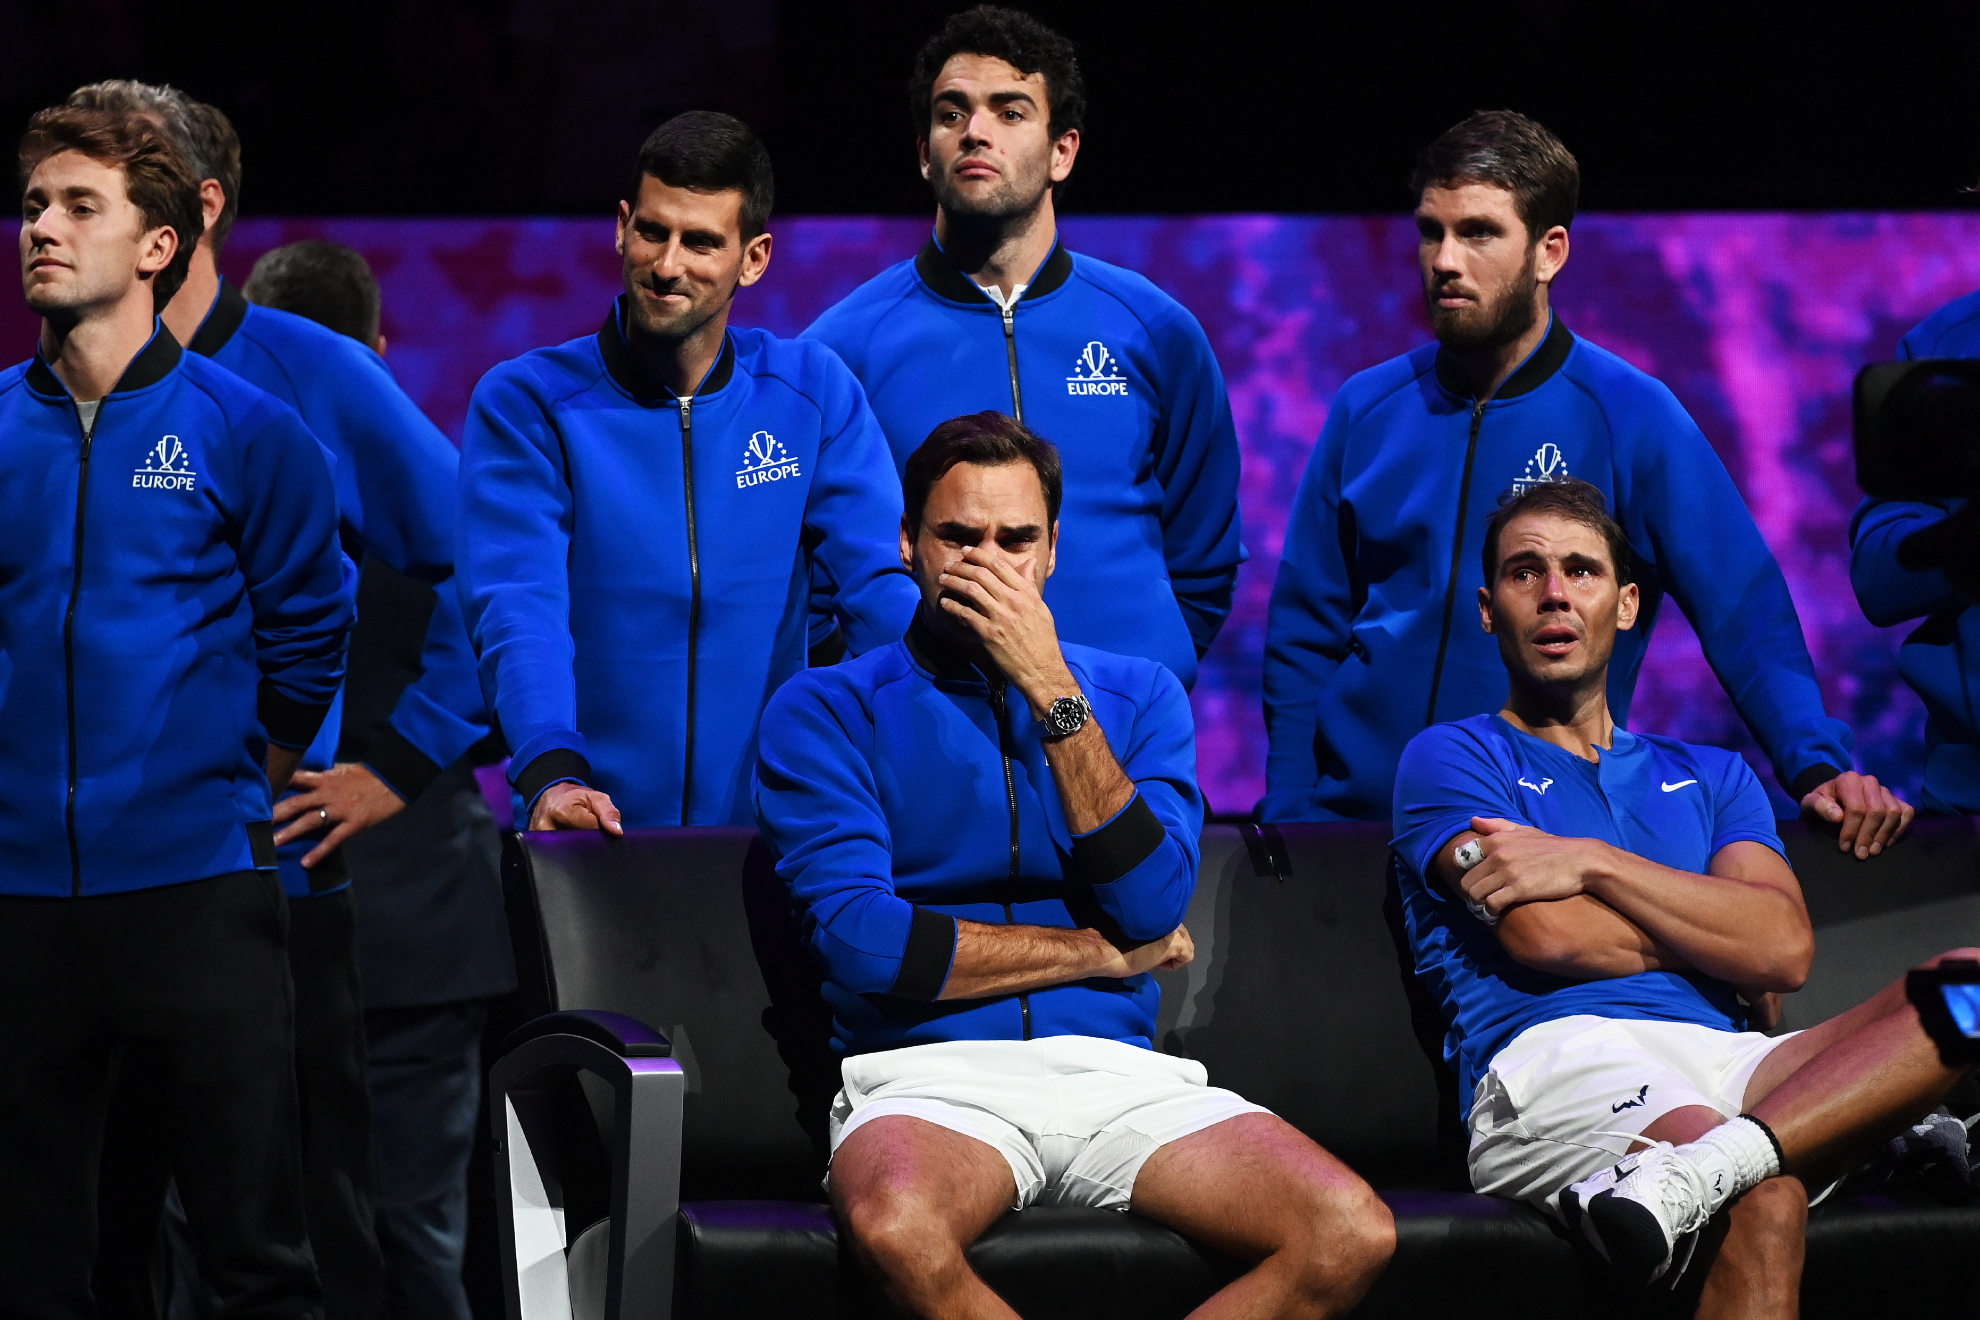 Roger Federer's tearful farewell speech / EFE